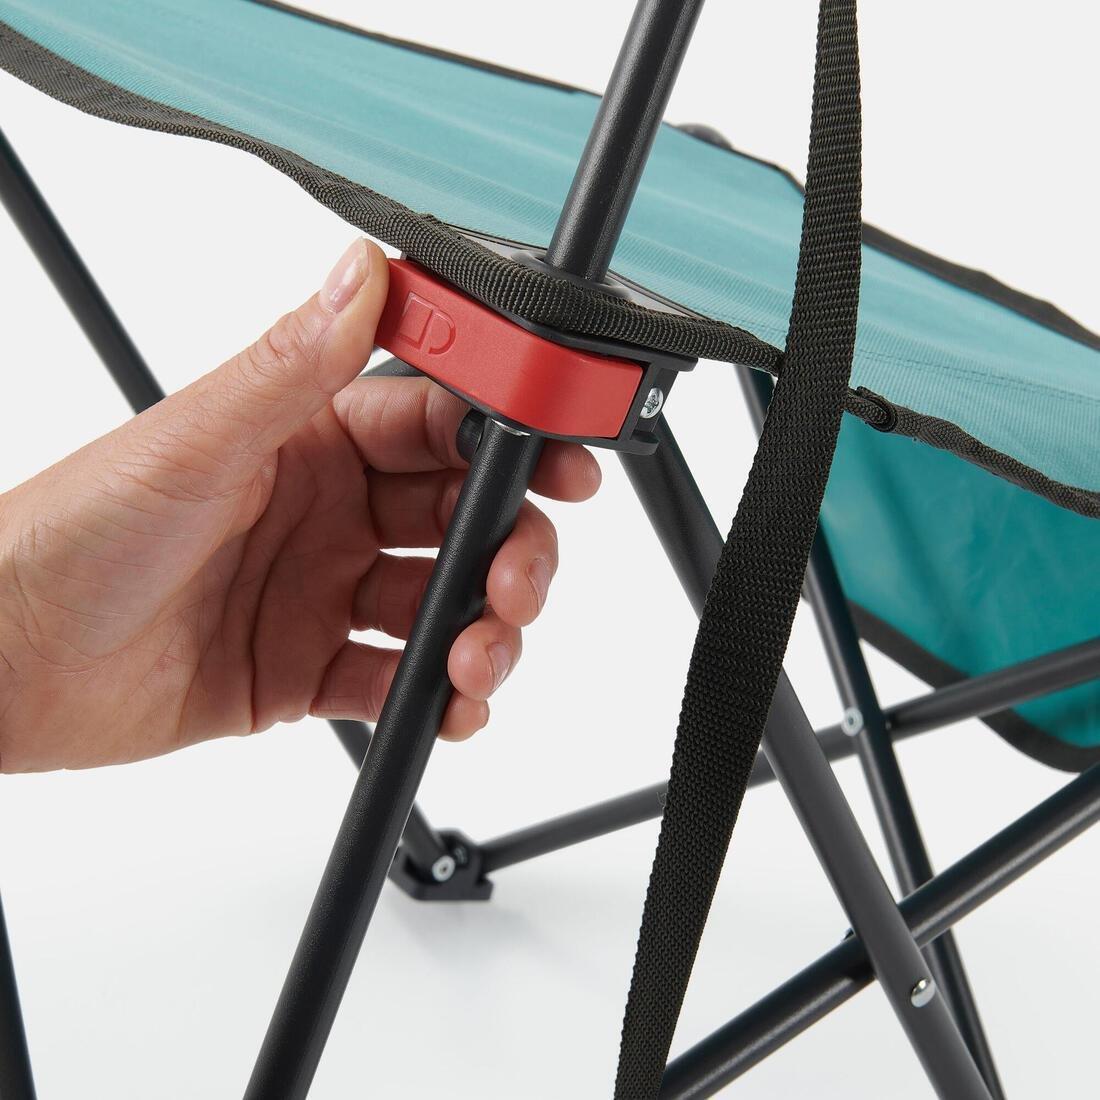 QUECHUA - Low Folding Camping Chair Mh100, Blue